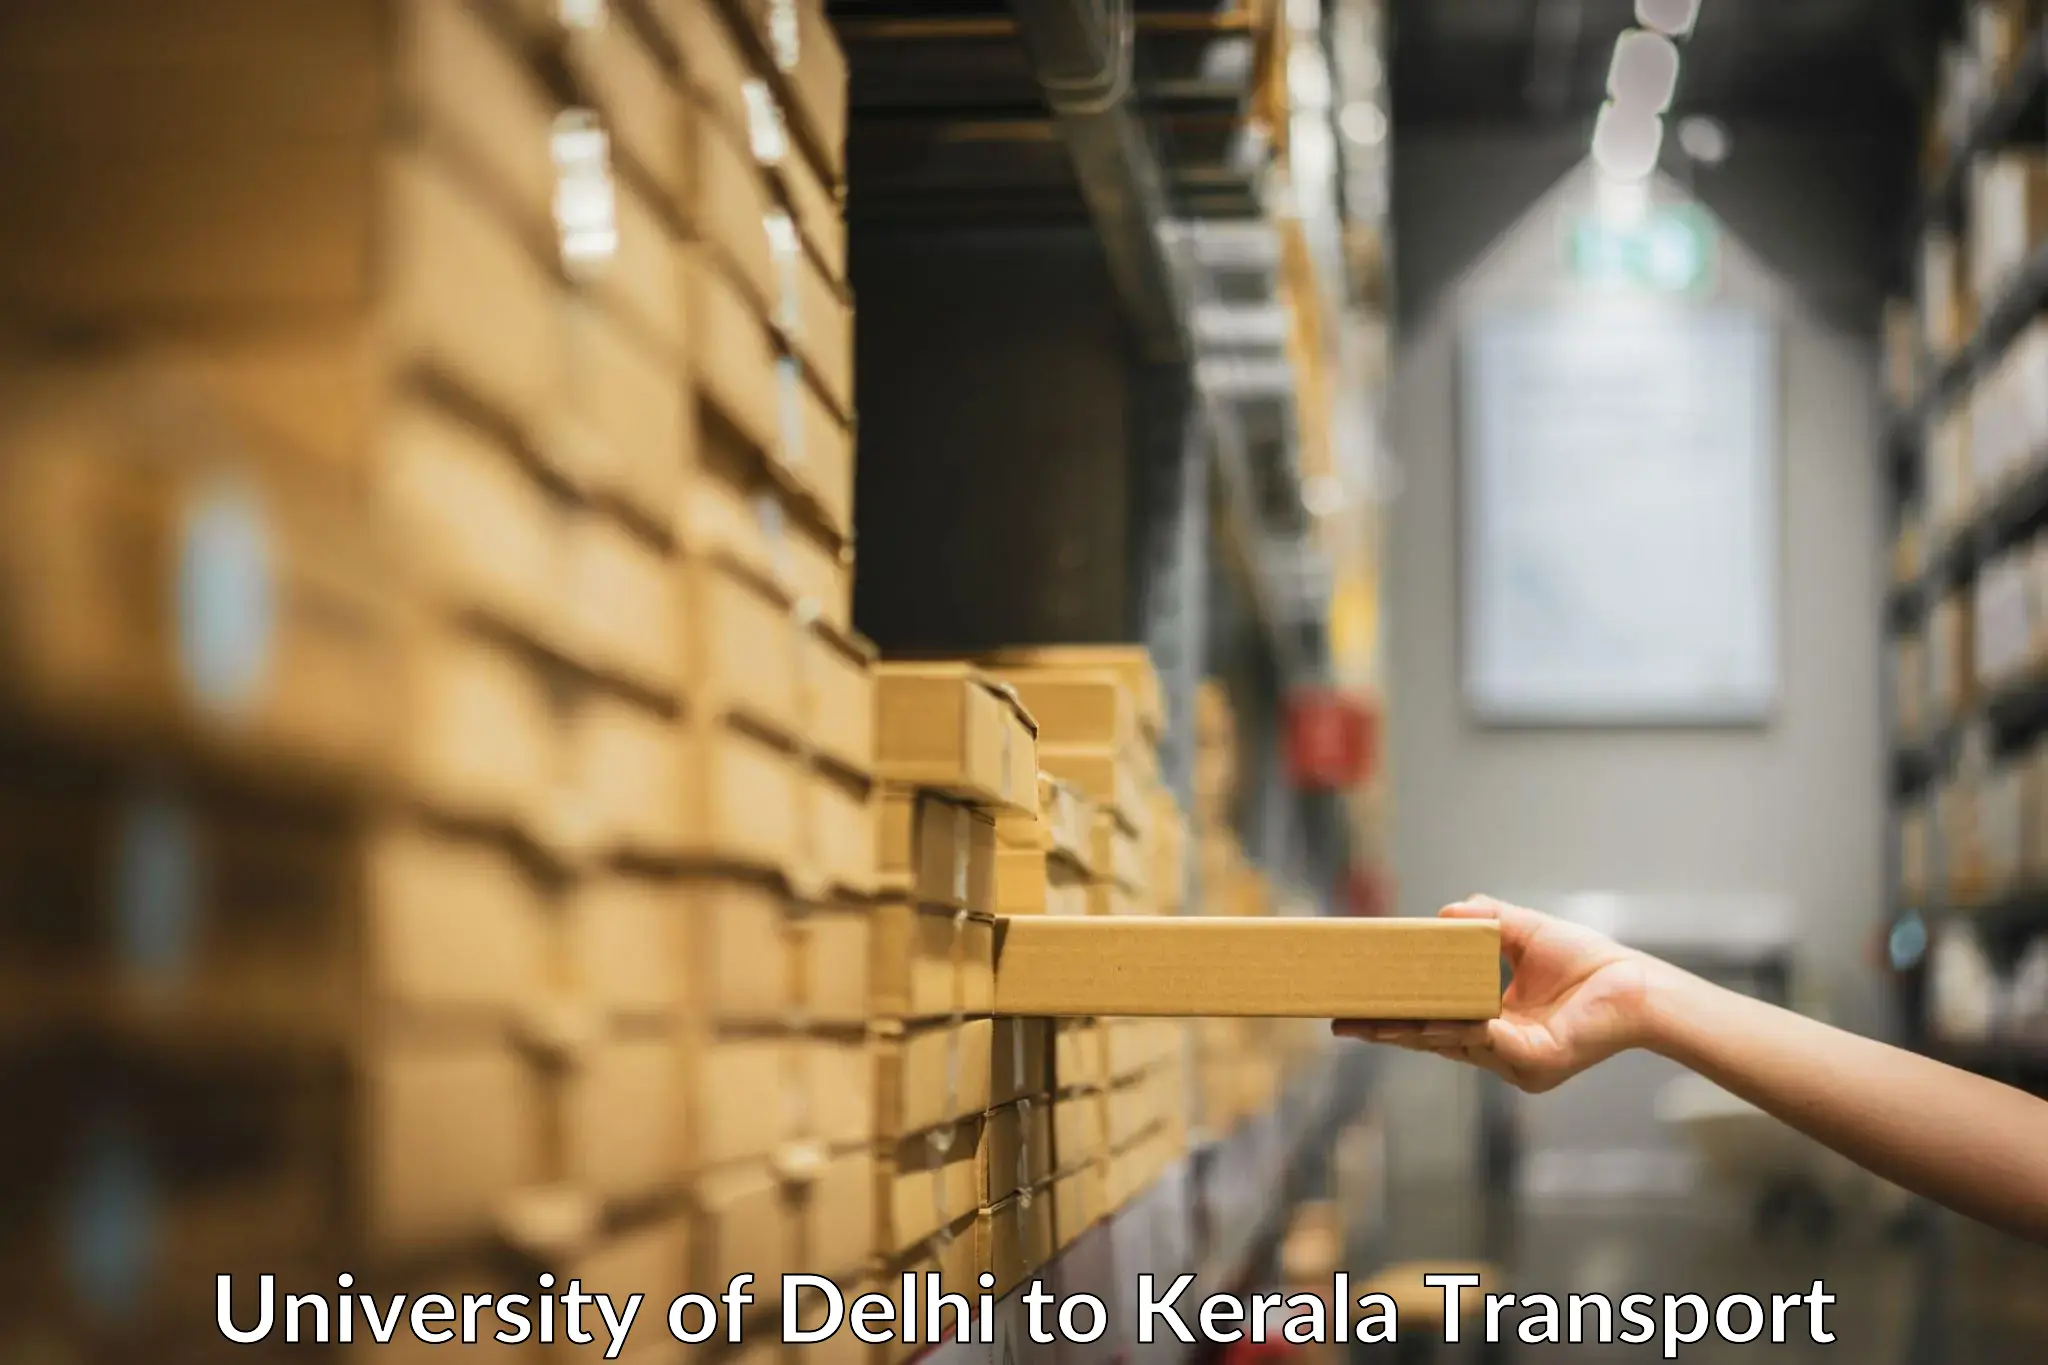 Online transport service University of Delhi to Calicut